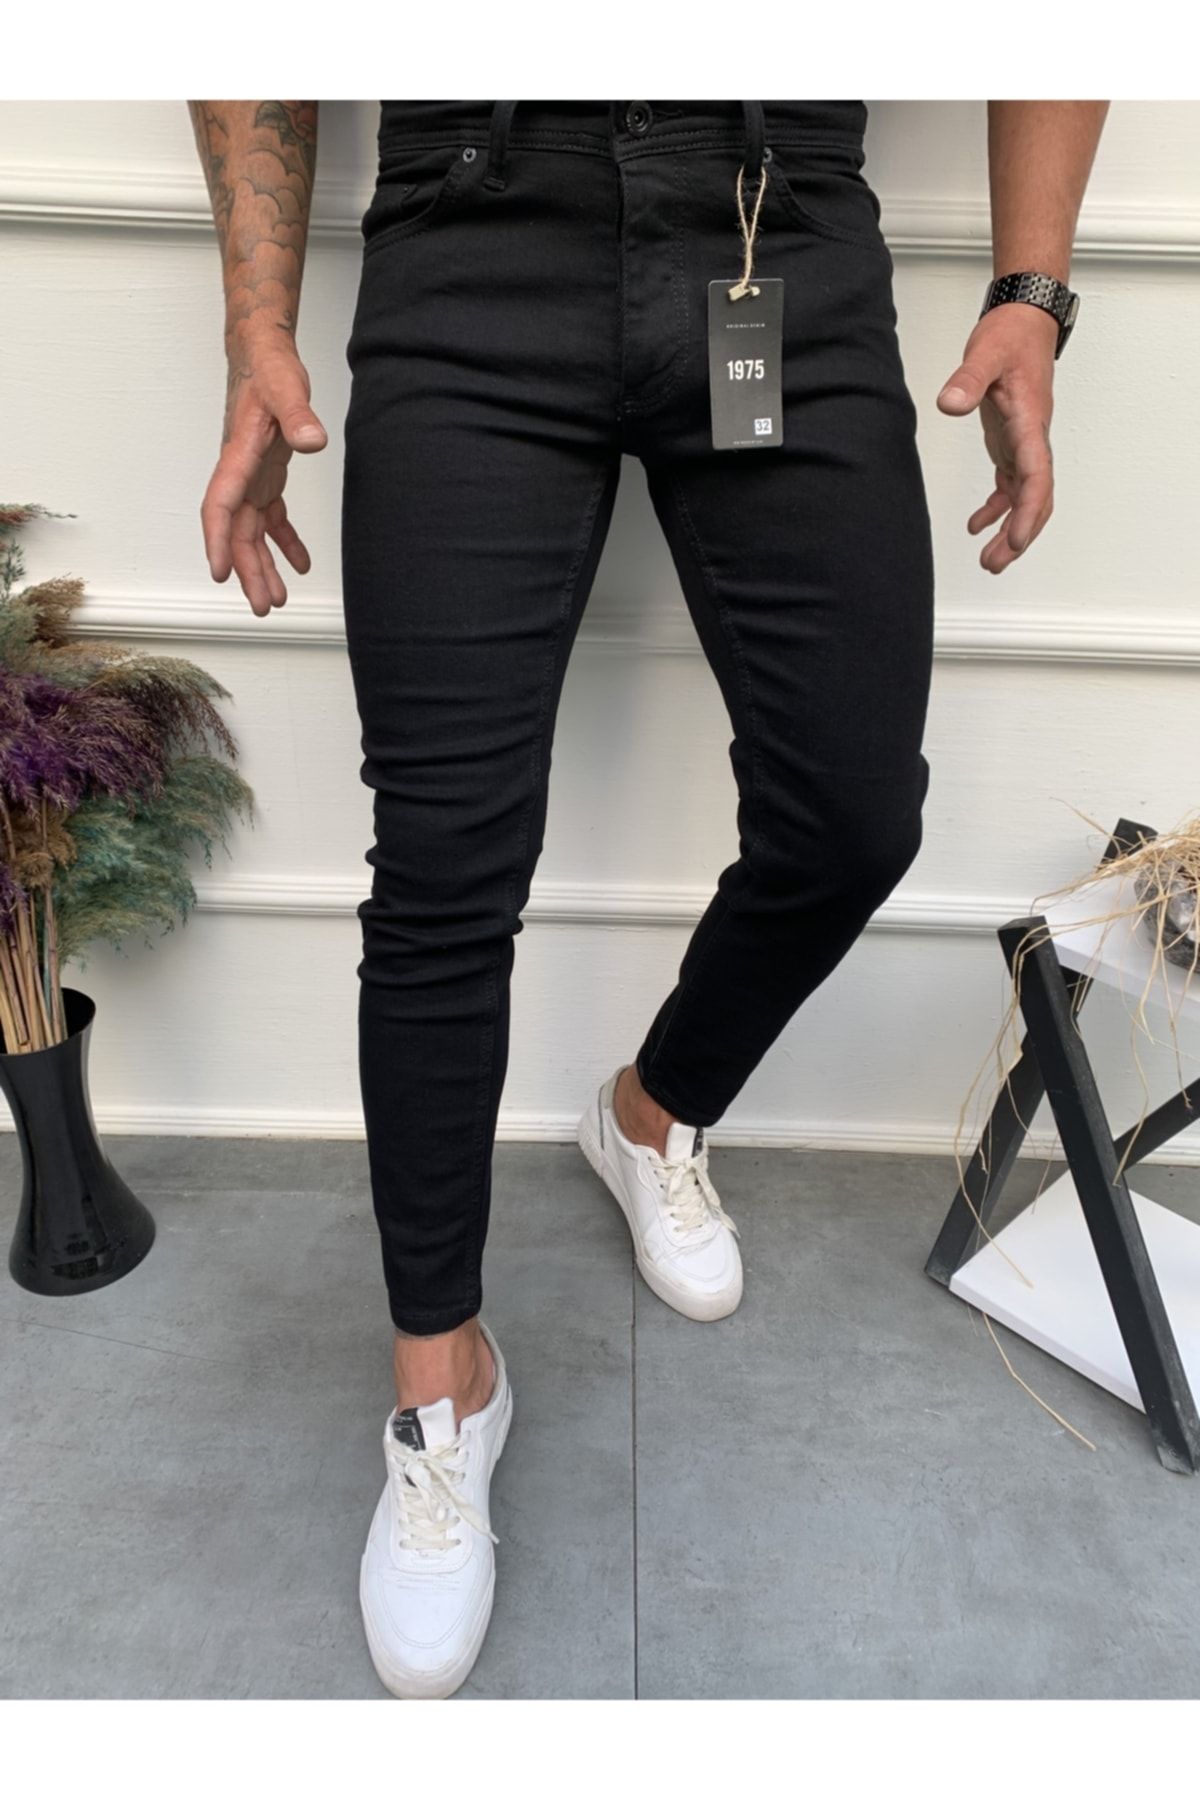 ENERJİN Erkek Jeans Skinny Fit Likralı Düz Siyah